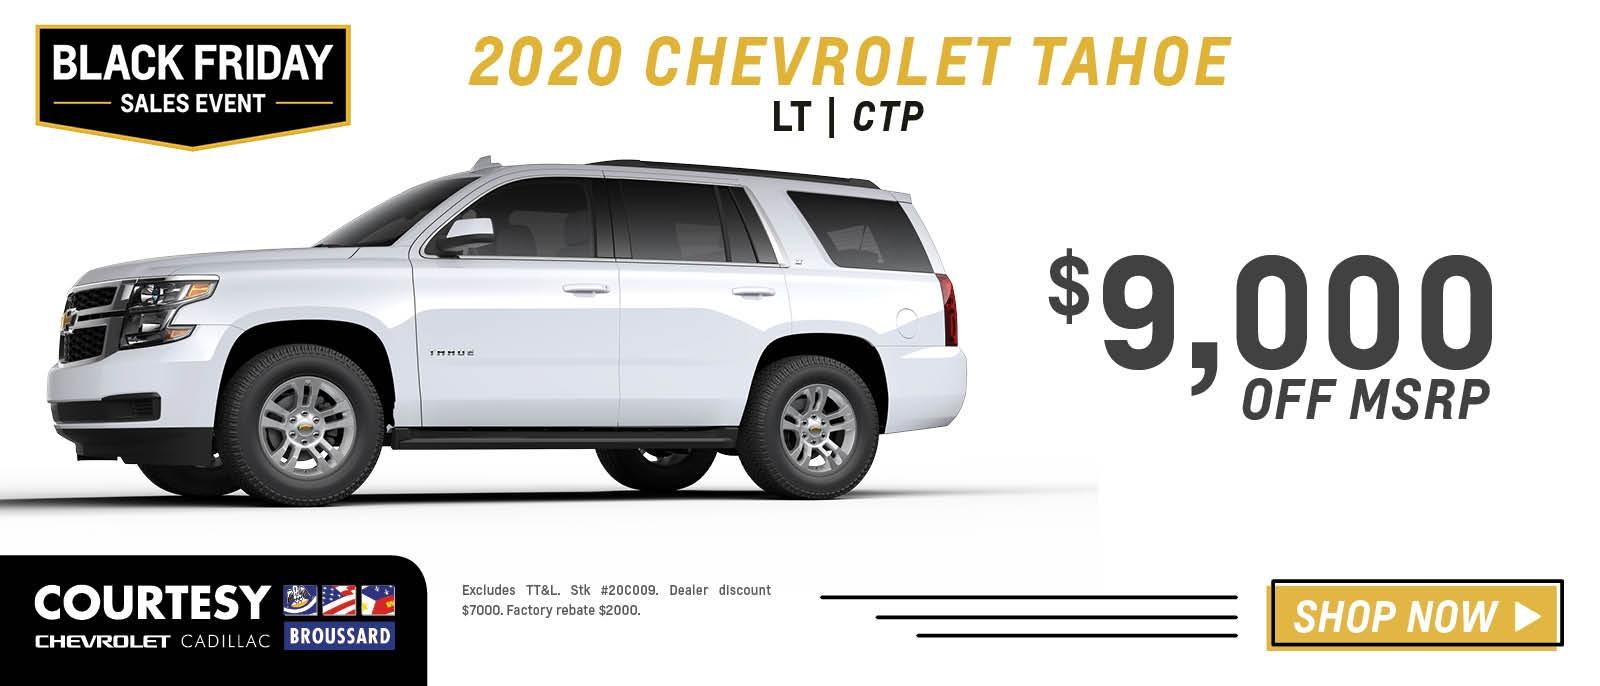 2019 Chevrolet Tahoe Premier- $61,988 - $2,000 GM Loyalty = $59,988